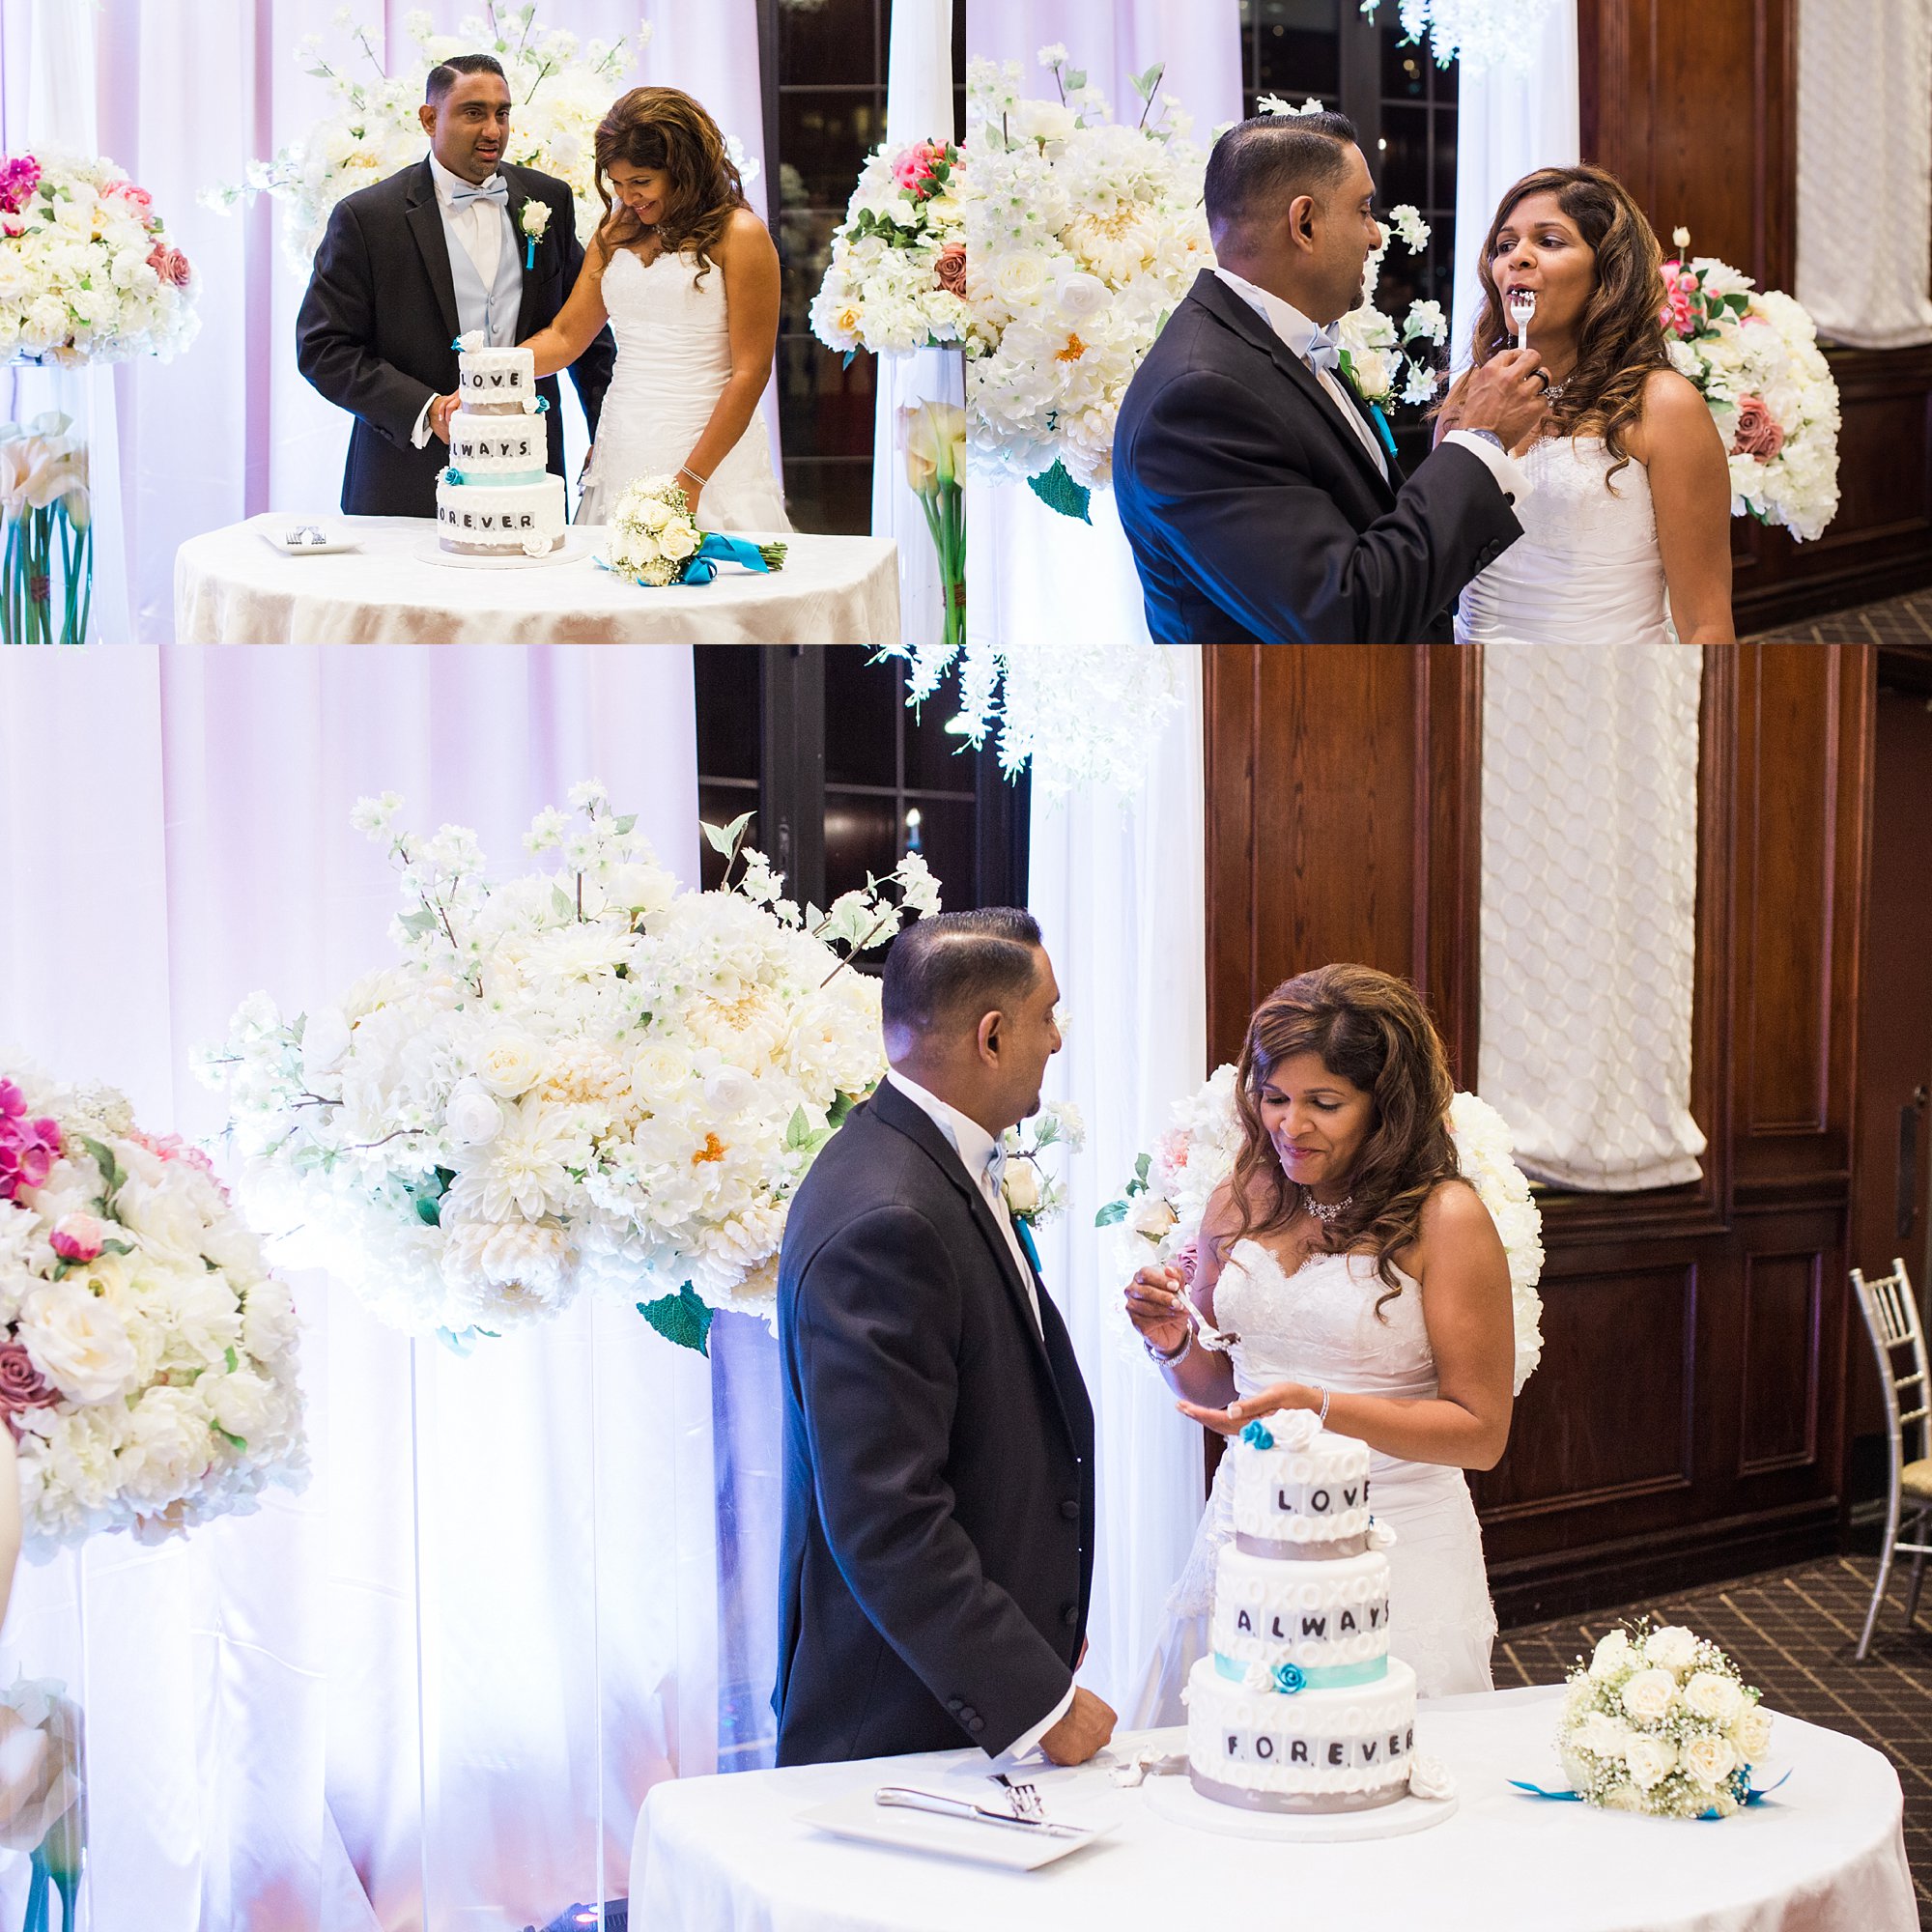 Jennifer Blaak Photography, Toronto Wedding Photographer, Hamilton Wedding Photographer, Paradise Banquet Hall, Wedding Cake, Cake Cutting, Bride and groom